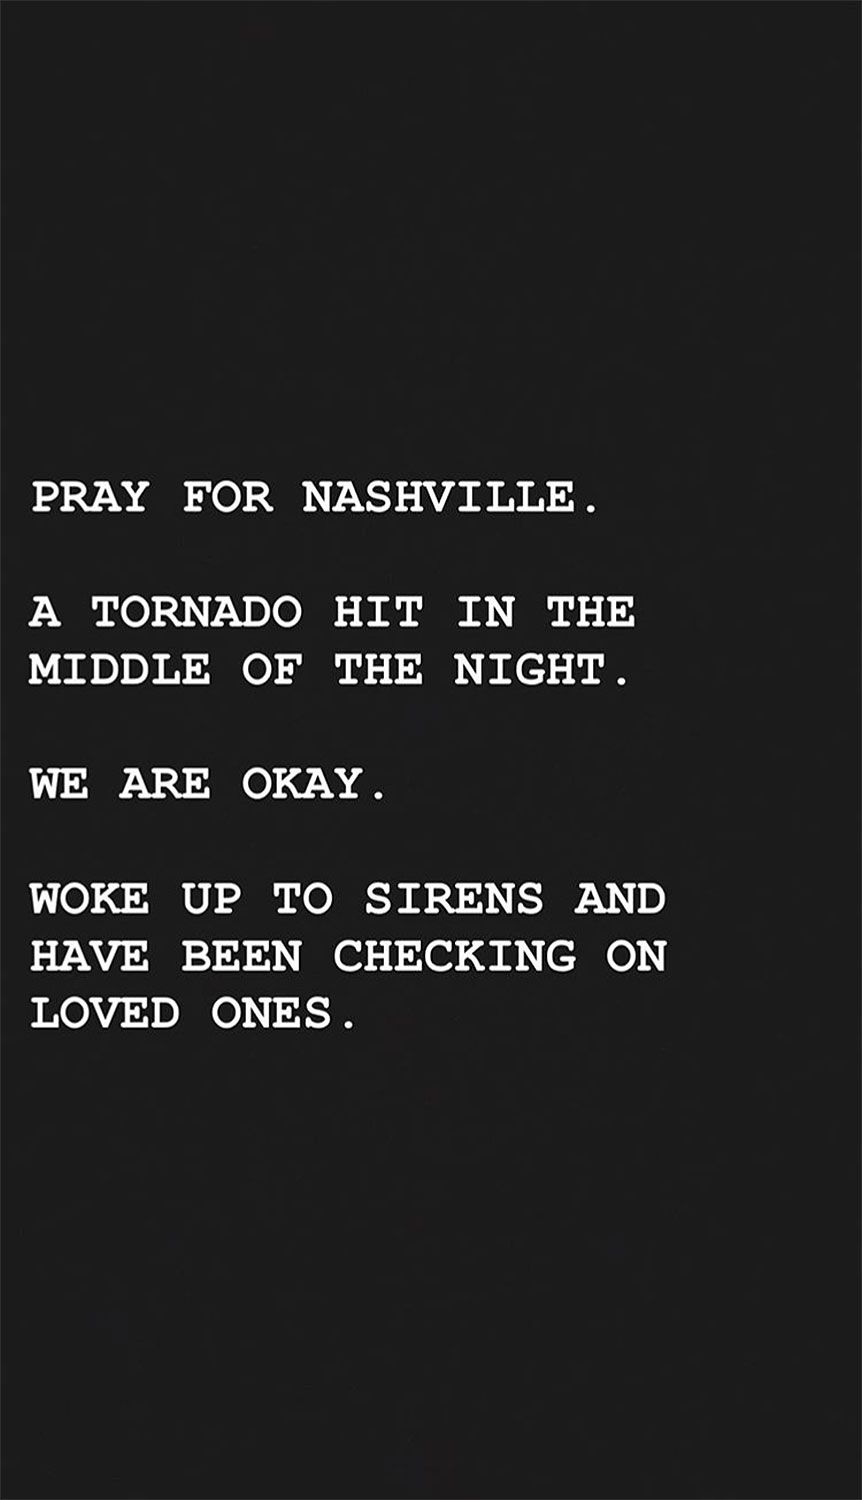 Nashville tornado reactions